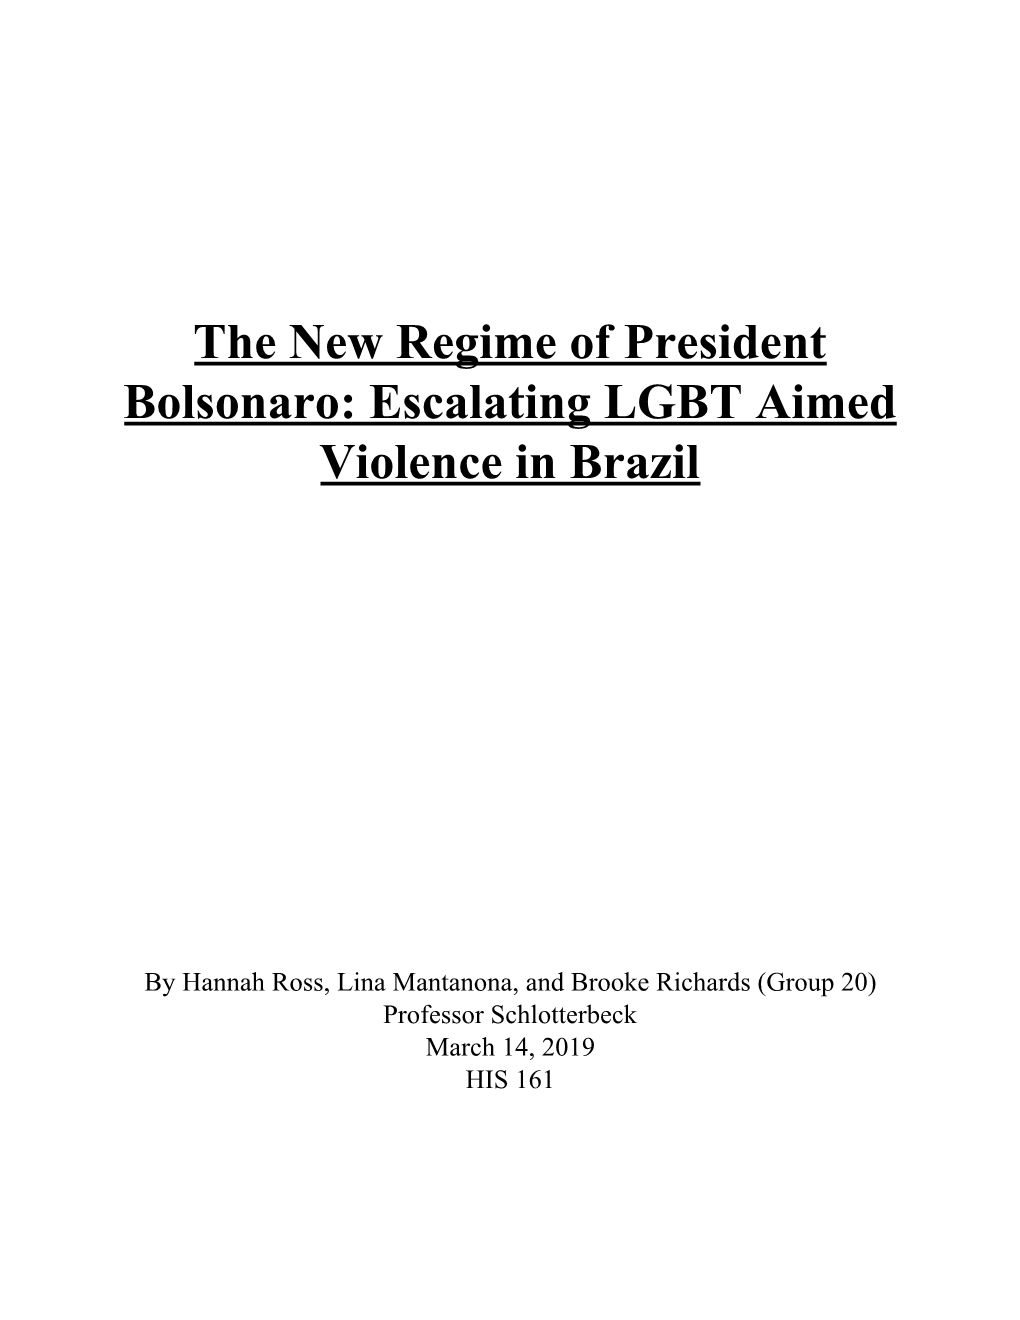 The New Regime of President Bolsonaro: Escalating LGBT Aimed